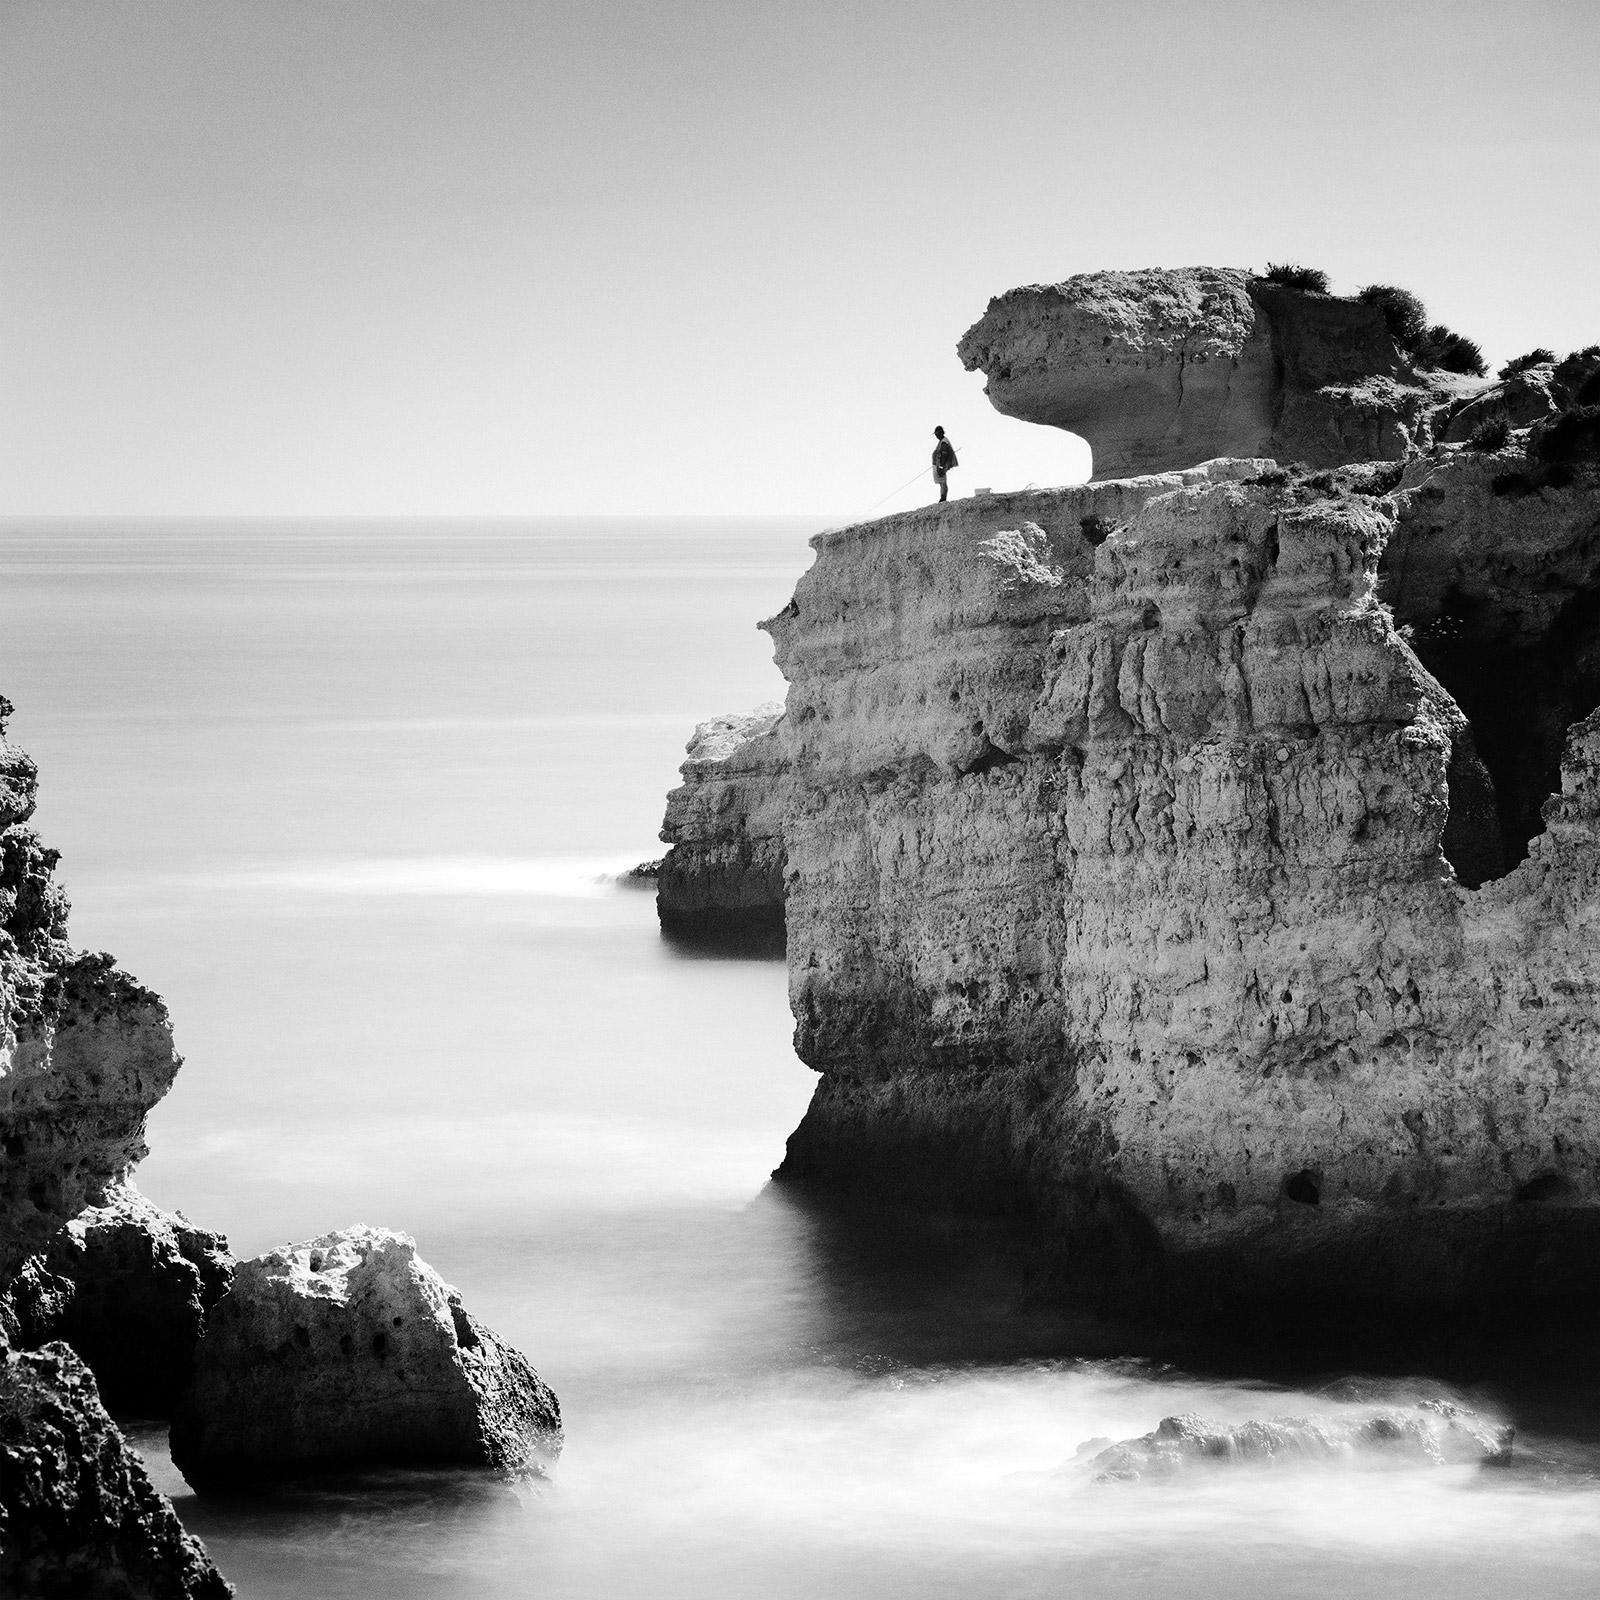 Rock Fishing, Shoreline, Cliffs, Portugal, black and white landscape photography